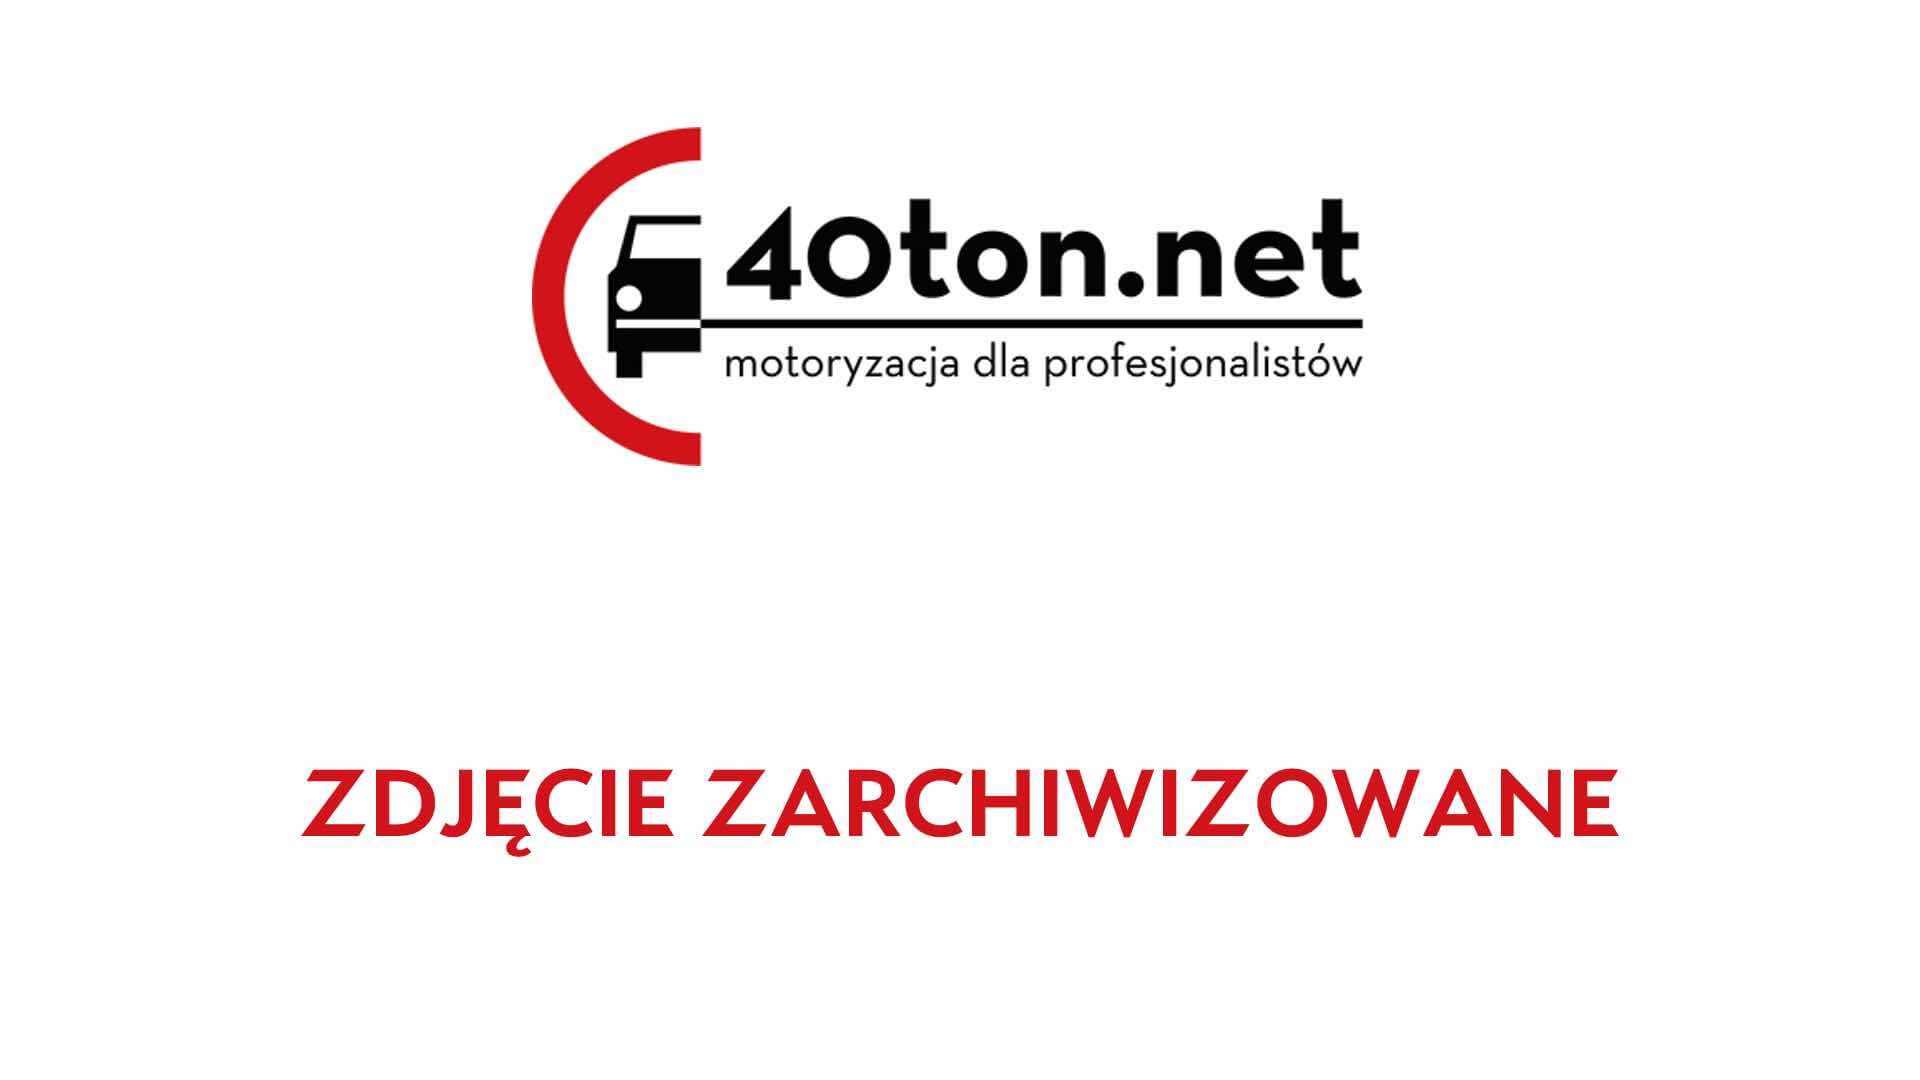 edostawcze_transit_sprinter